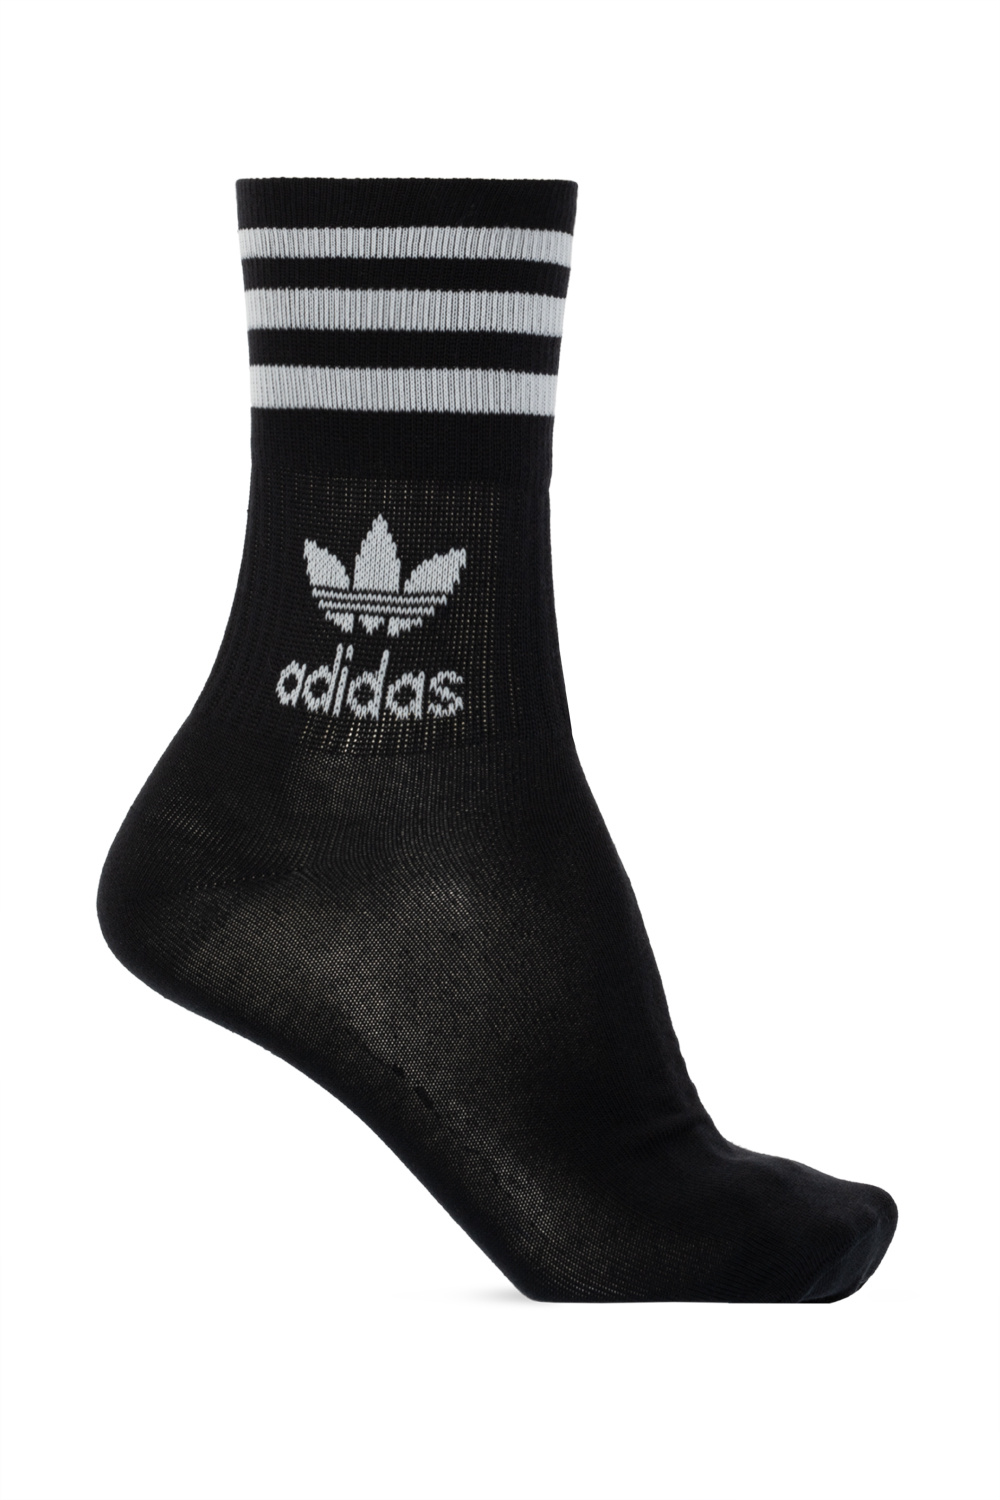 Black Logo socks 5-pack ADIDAS Originals - Vitkac GB